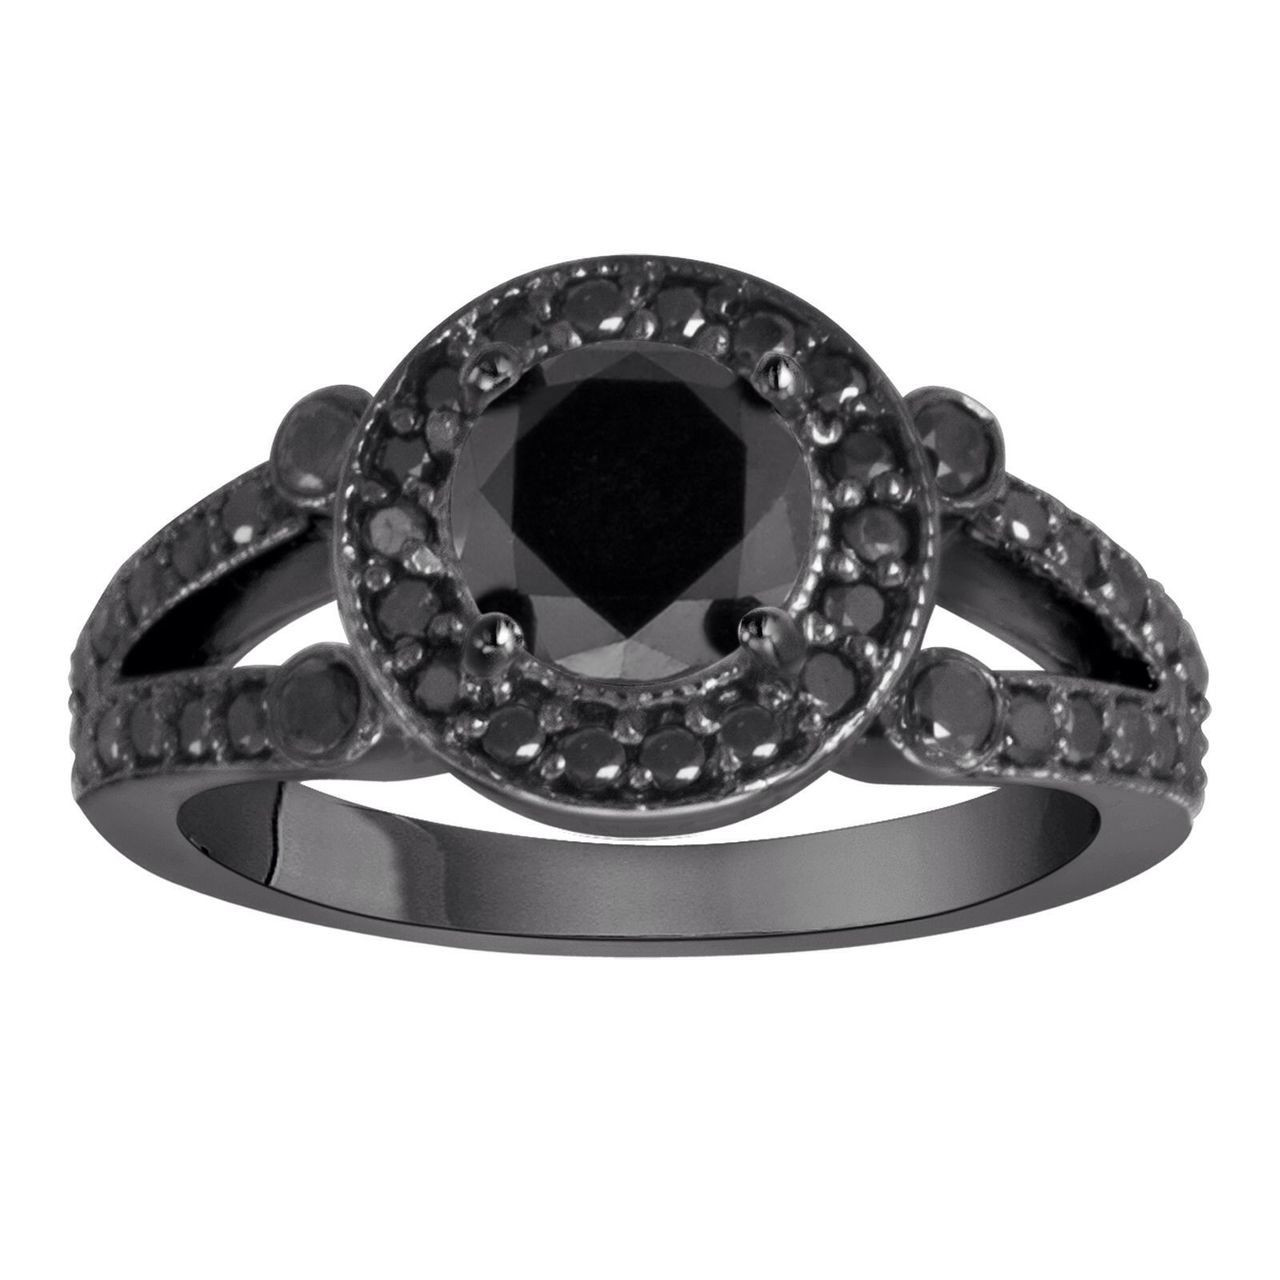 Black Diamond Black Gold Engagement Rings
 Black Diamond Engagement Ring 14k Black Gold 1 60 Carat